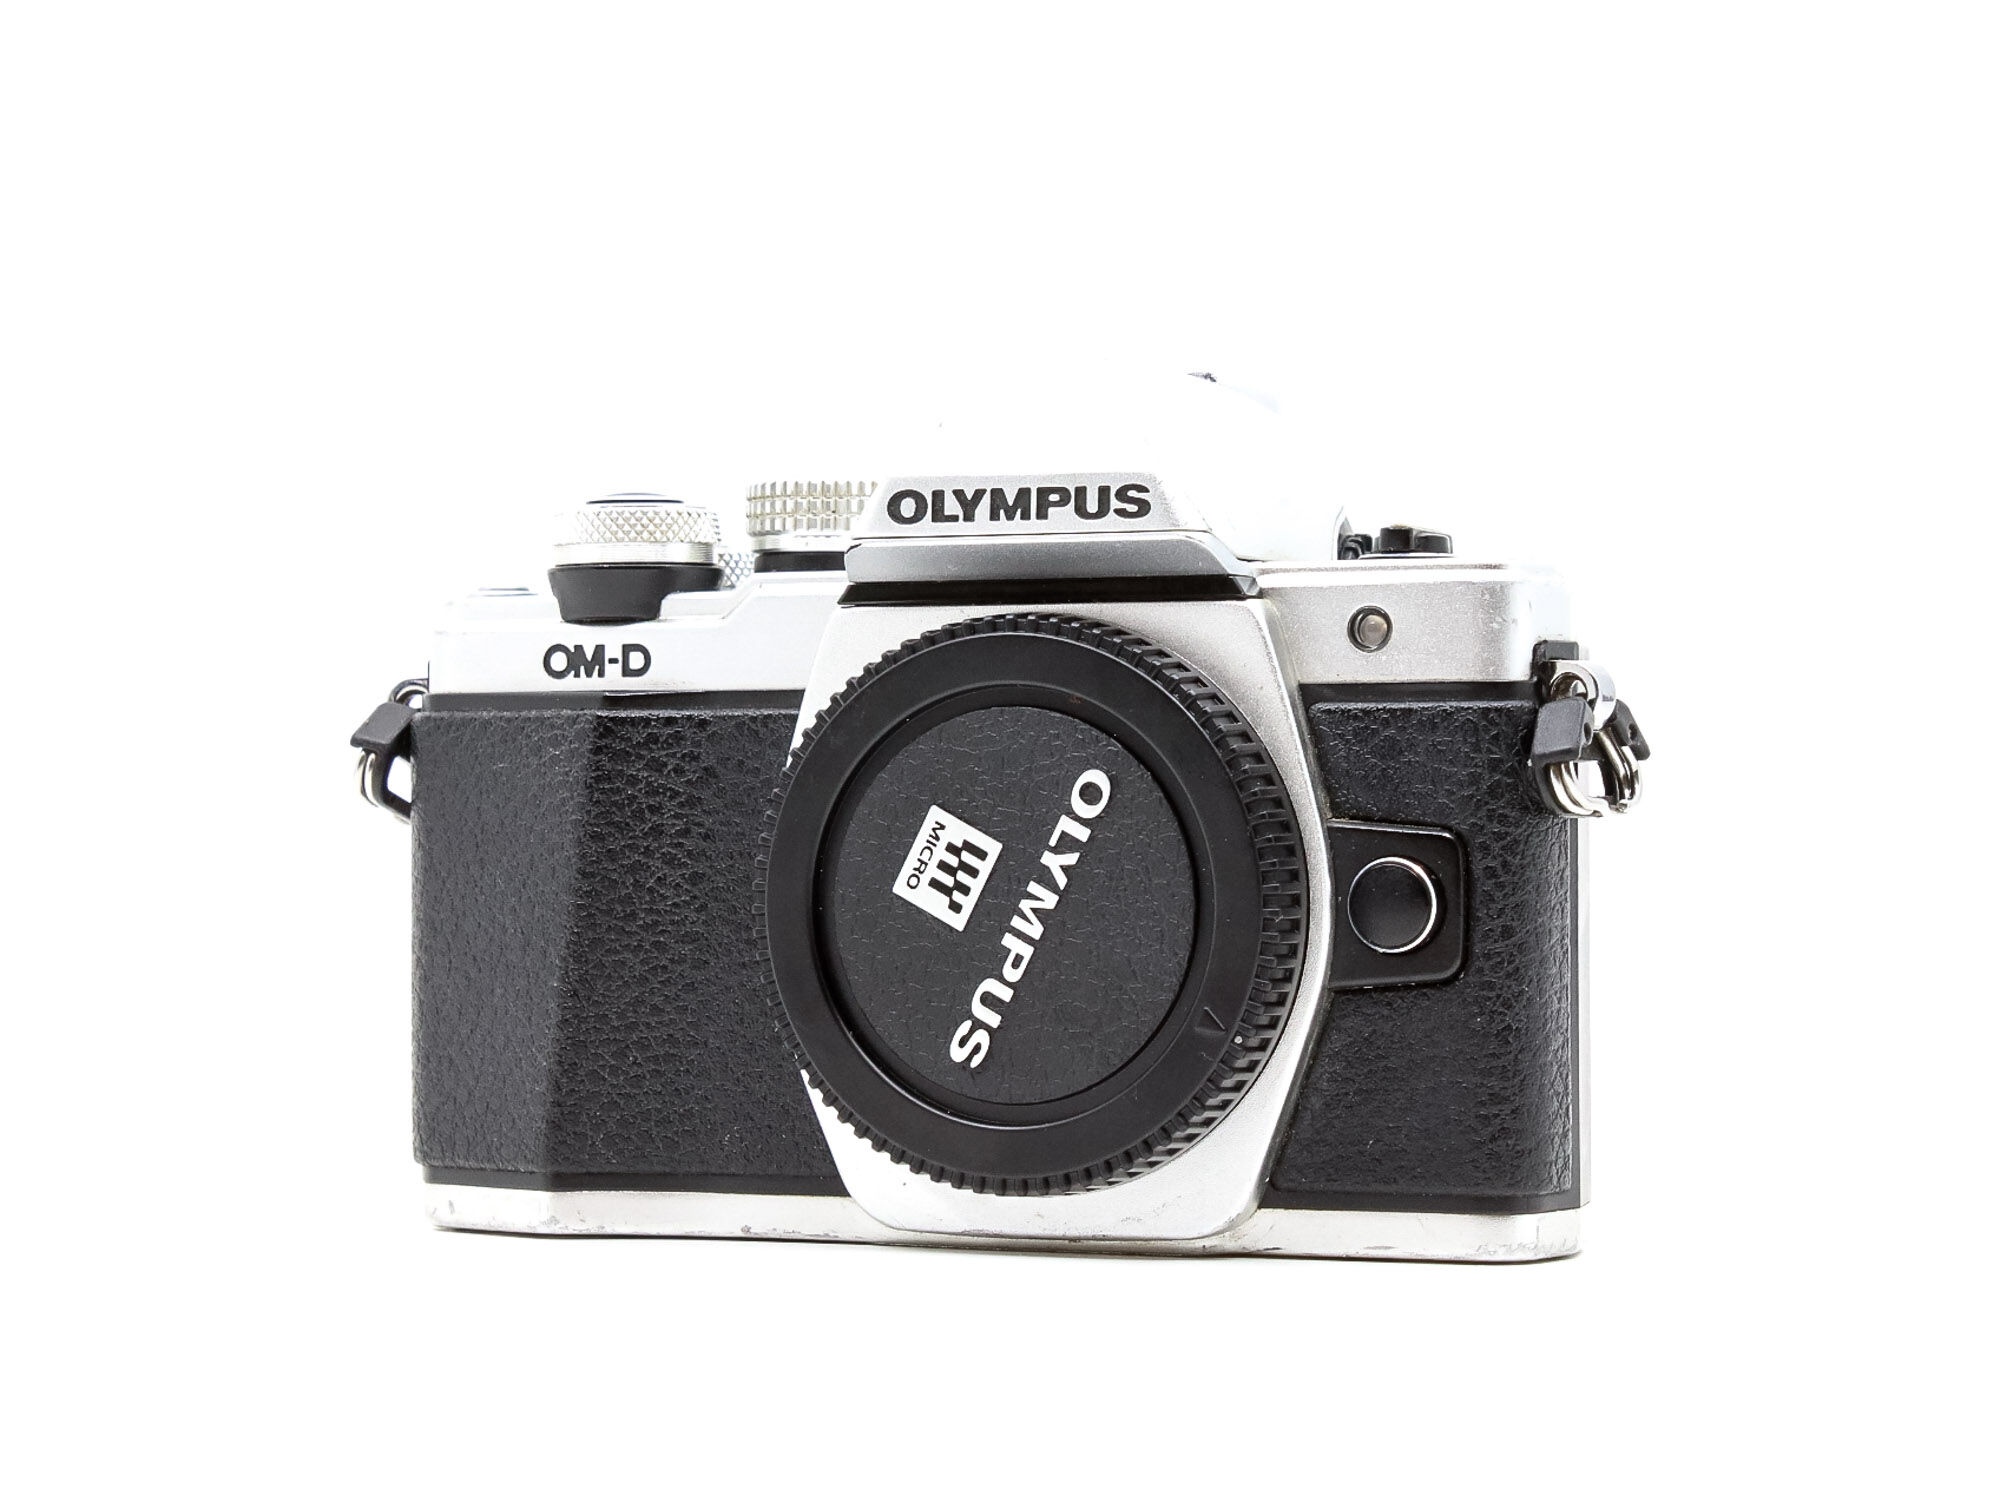 Olympus OM-D E-M10 Mark II (Condition: Good)